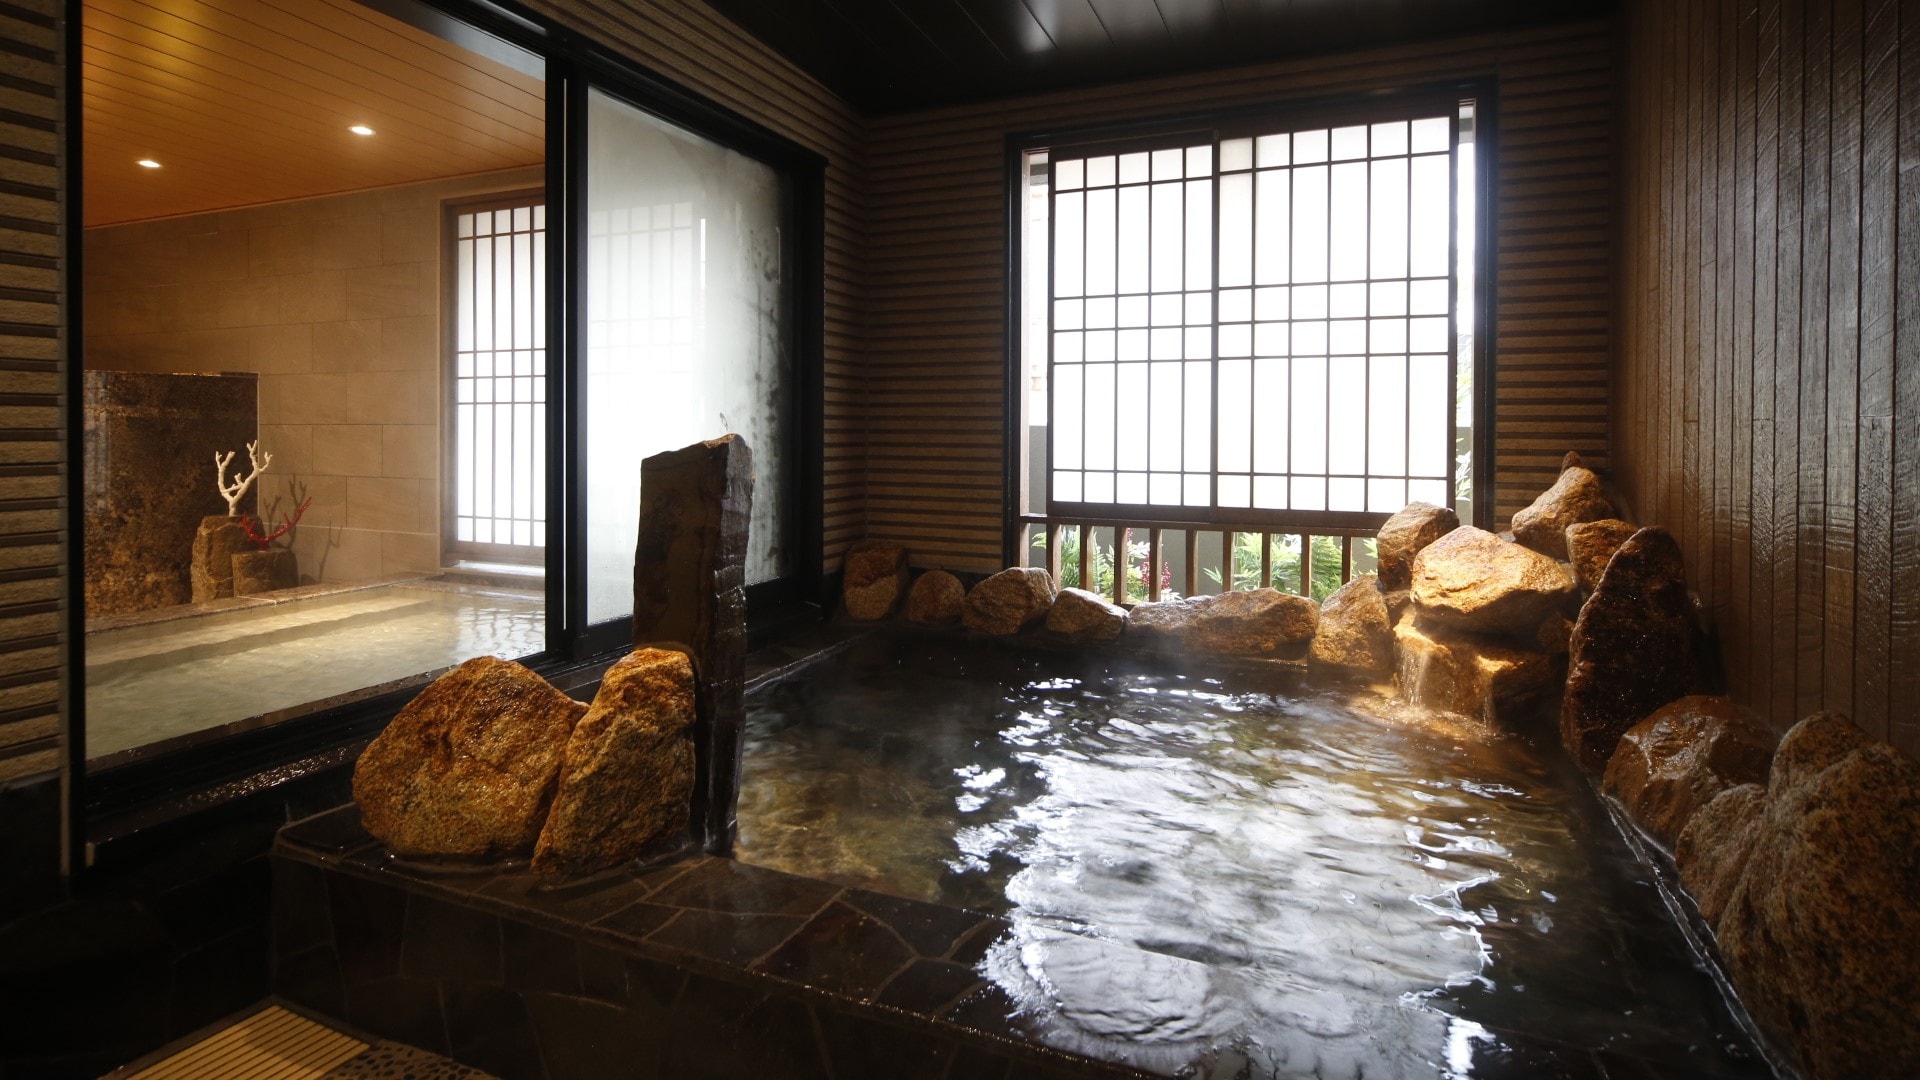 ◇ Men's public bath, water temperature: 41-43 degrees